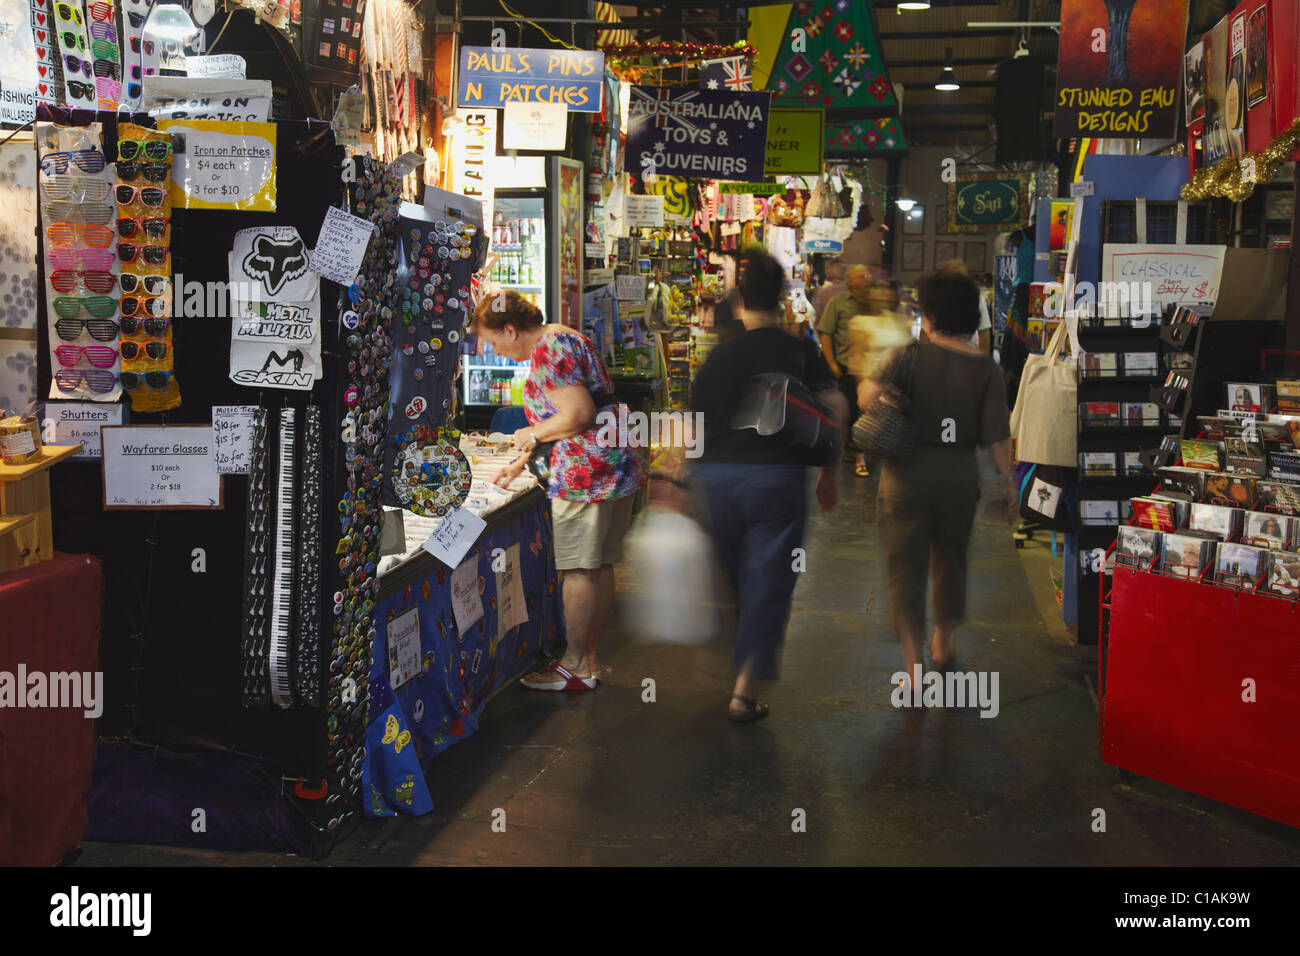 Souvenir stalls in Fremantle Market, Fremantle, Western Australia, Australia Stock Photo